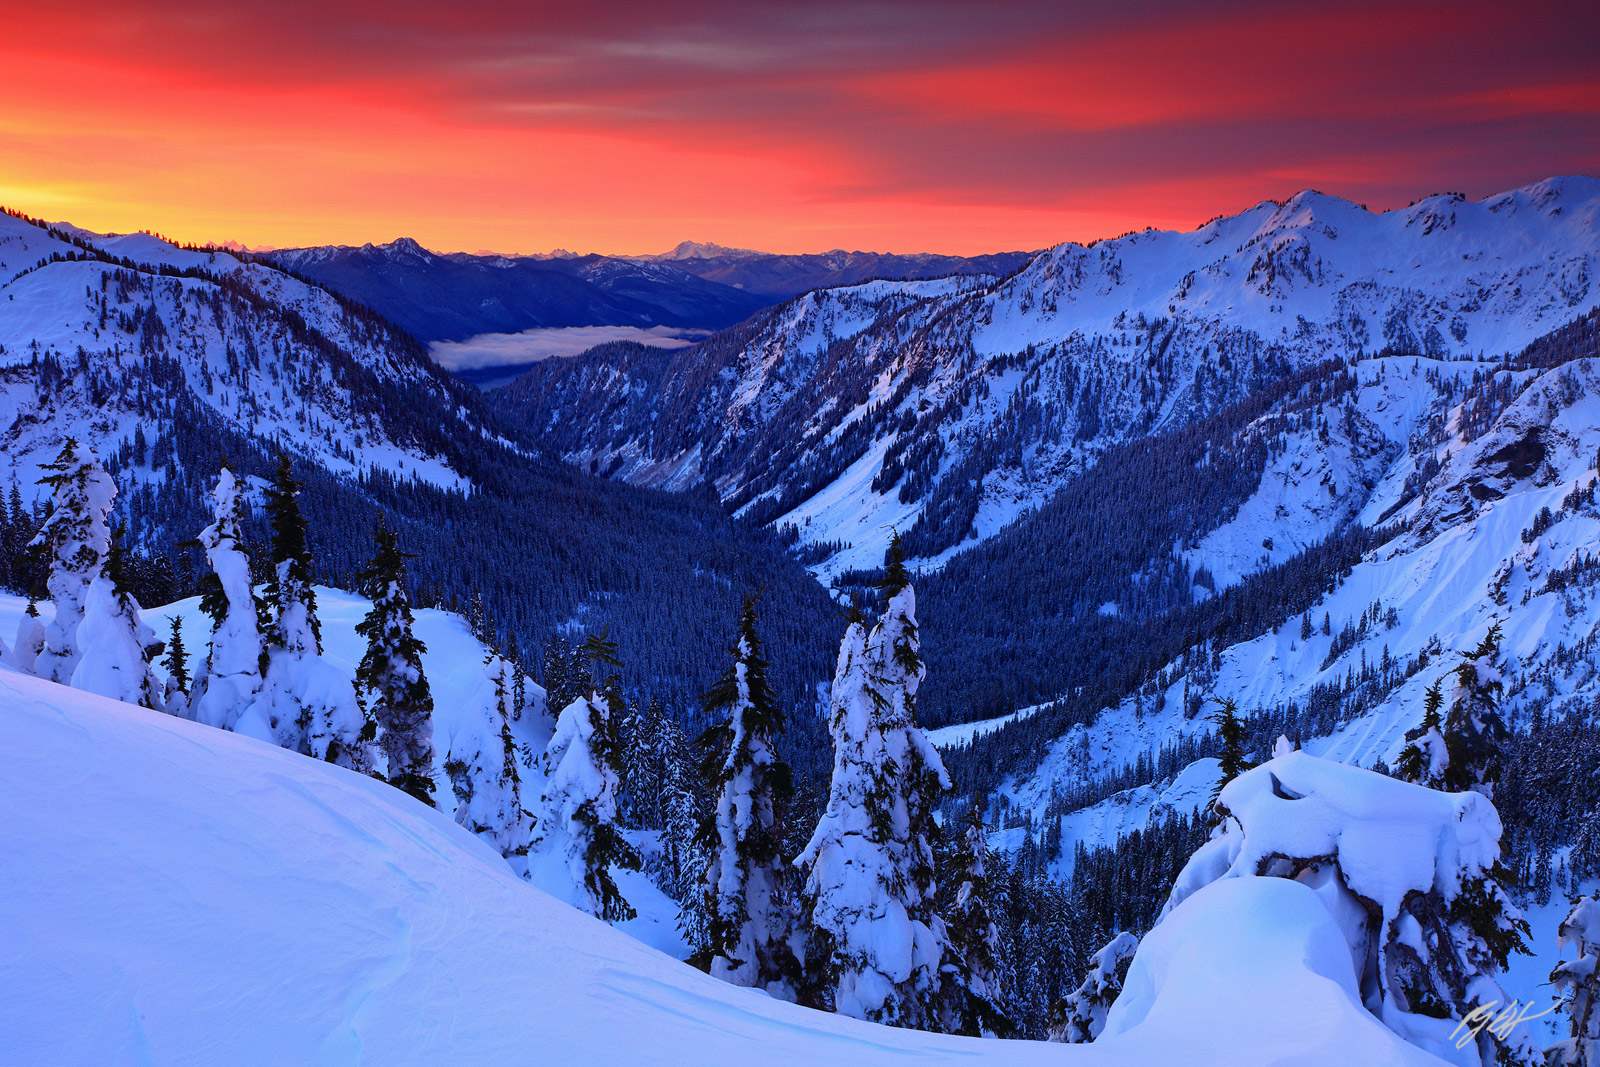 Winter Sunset from Artist Ridge in the Mt Baker National Recreation Area in Washington